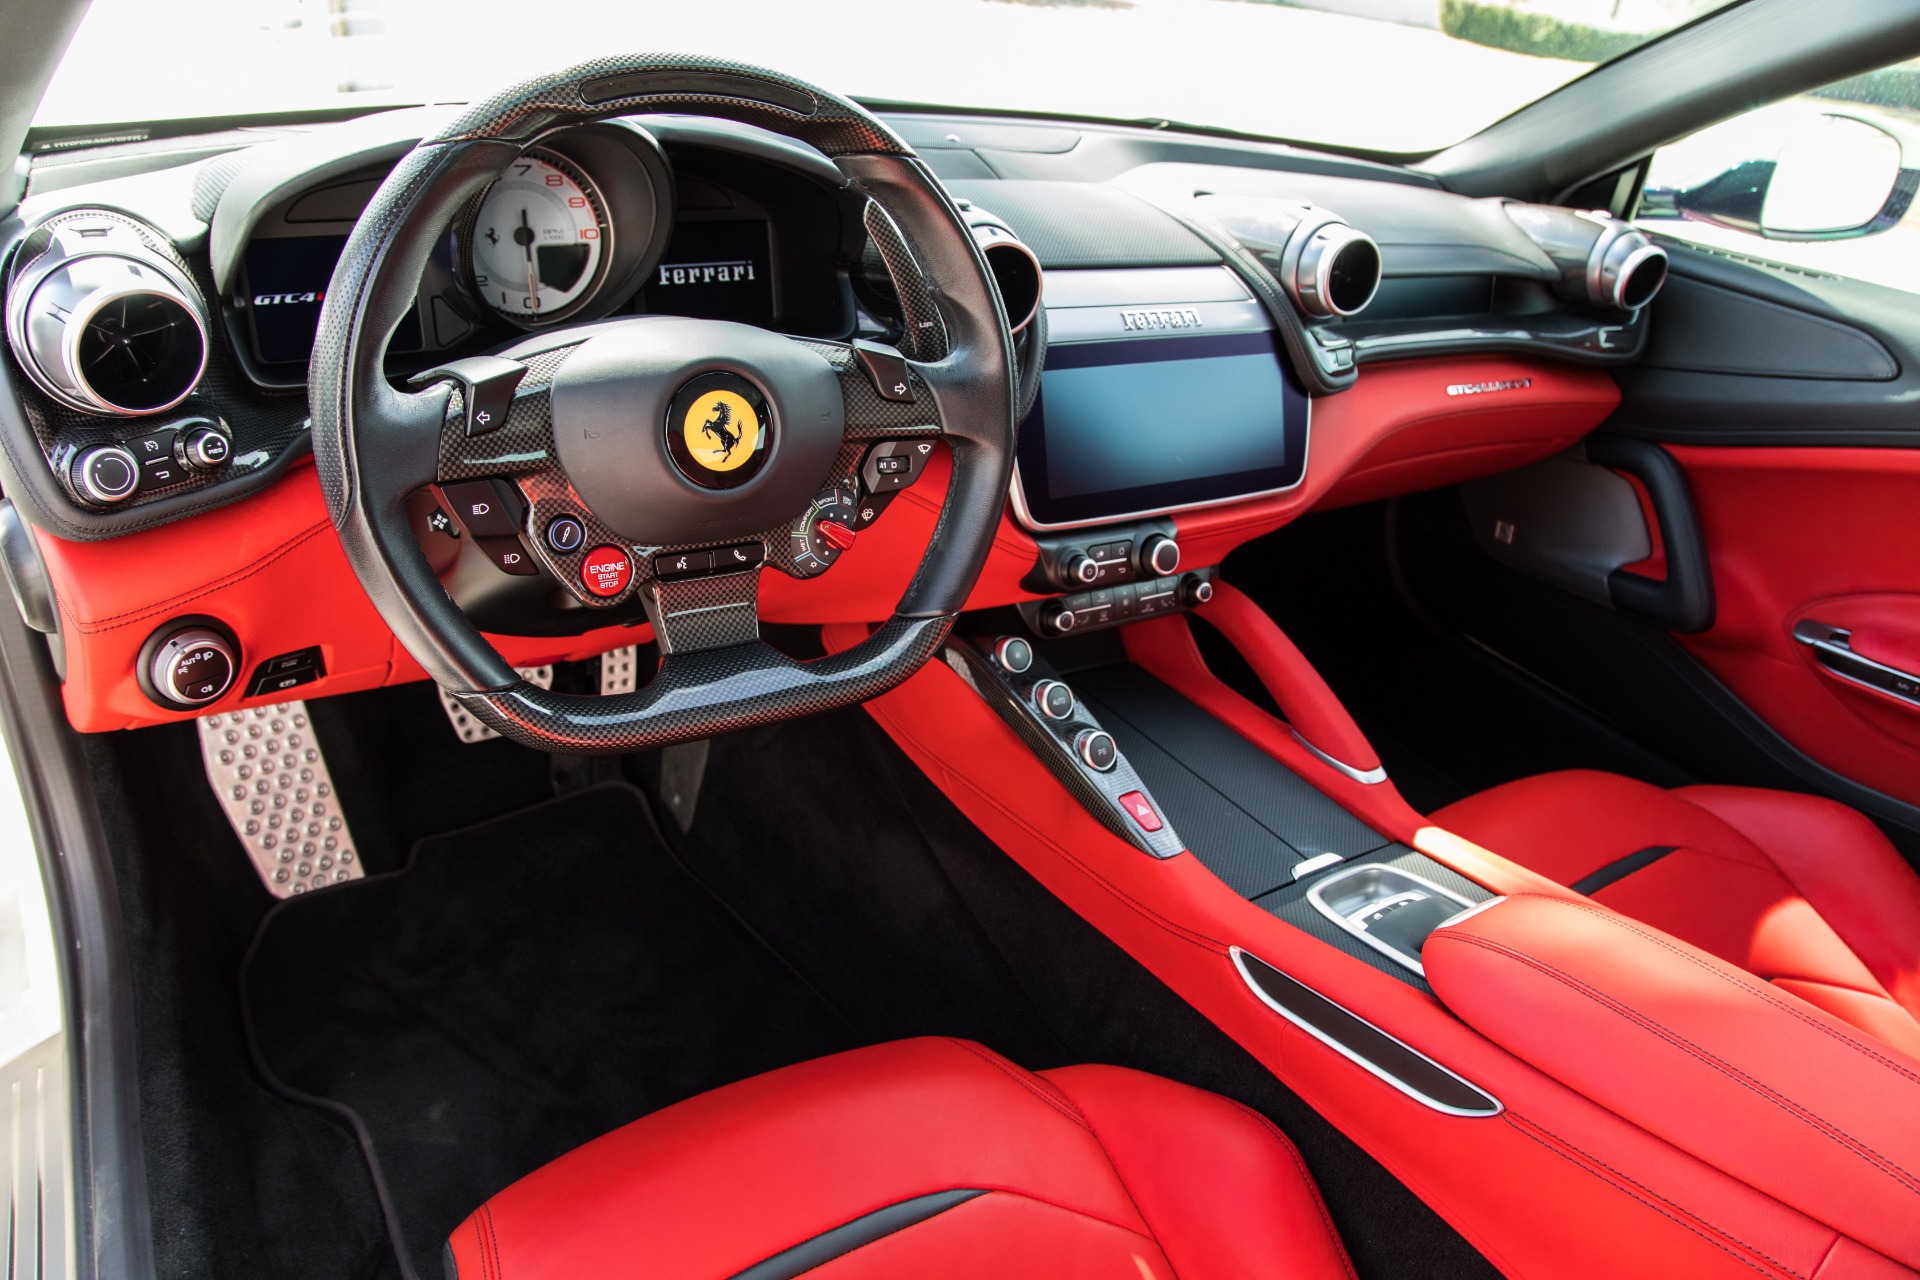 Used 2018 Ferrari GTC4Lusso T For Sale ($209,000) | Marino Performance  Motors Stock #232277